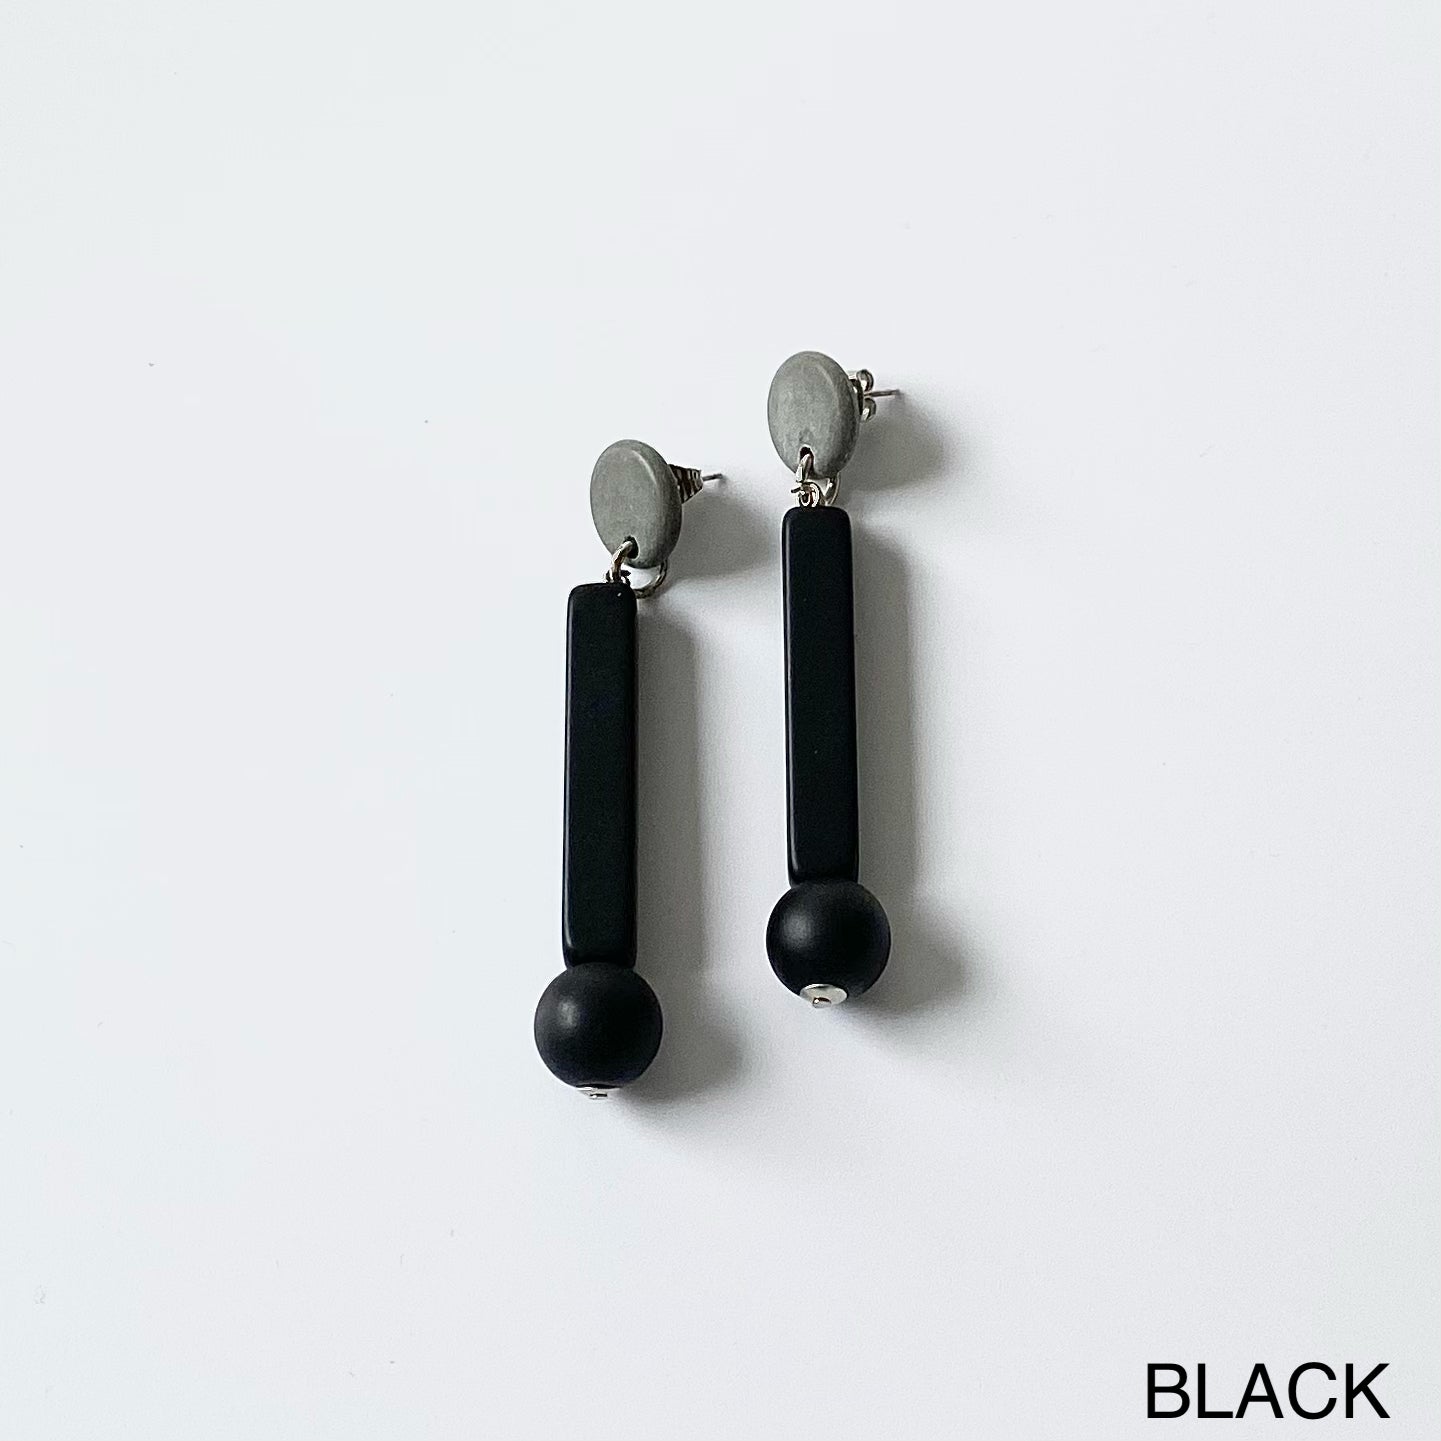 BLACK / FREE